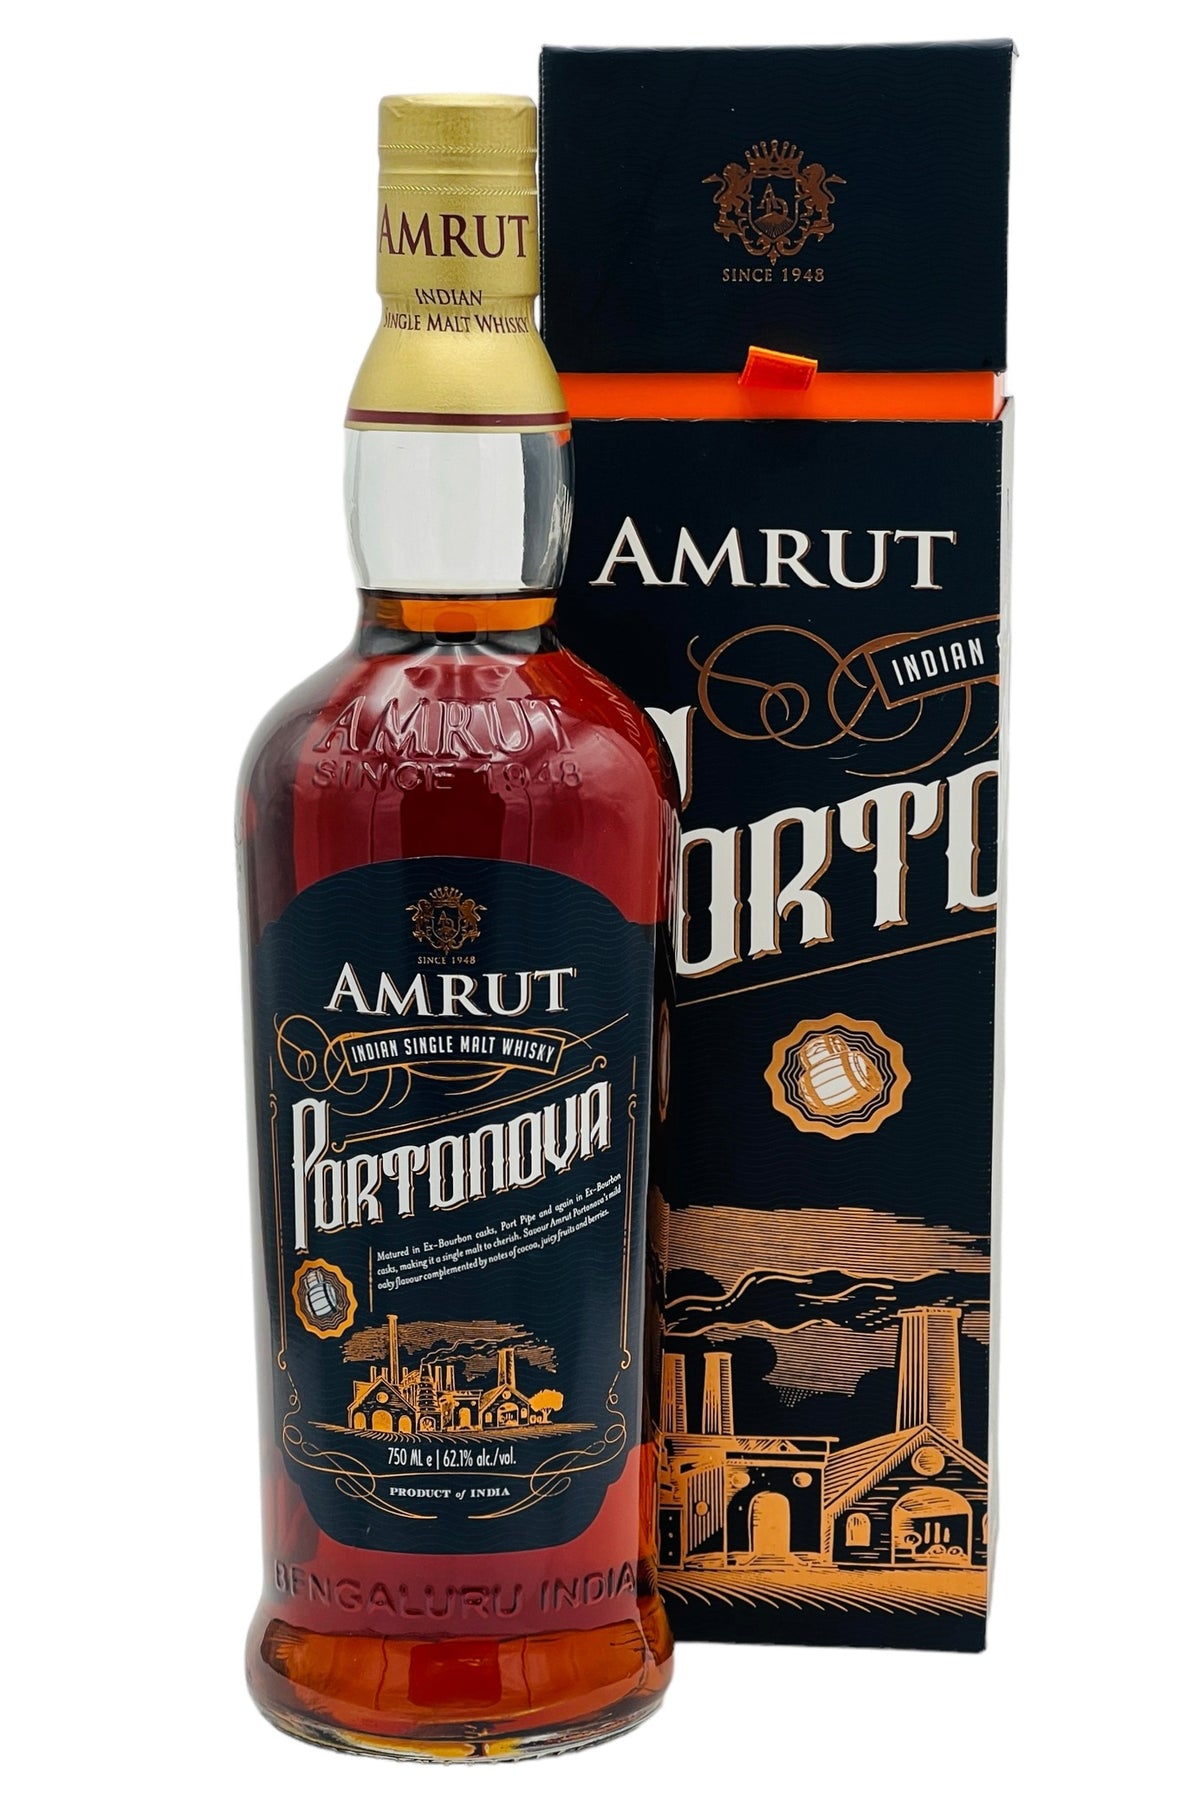 Amrut Portonova Single Malt Indian Whisky